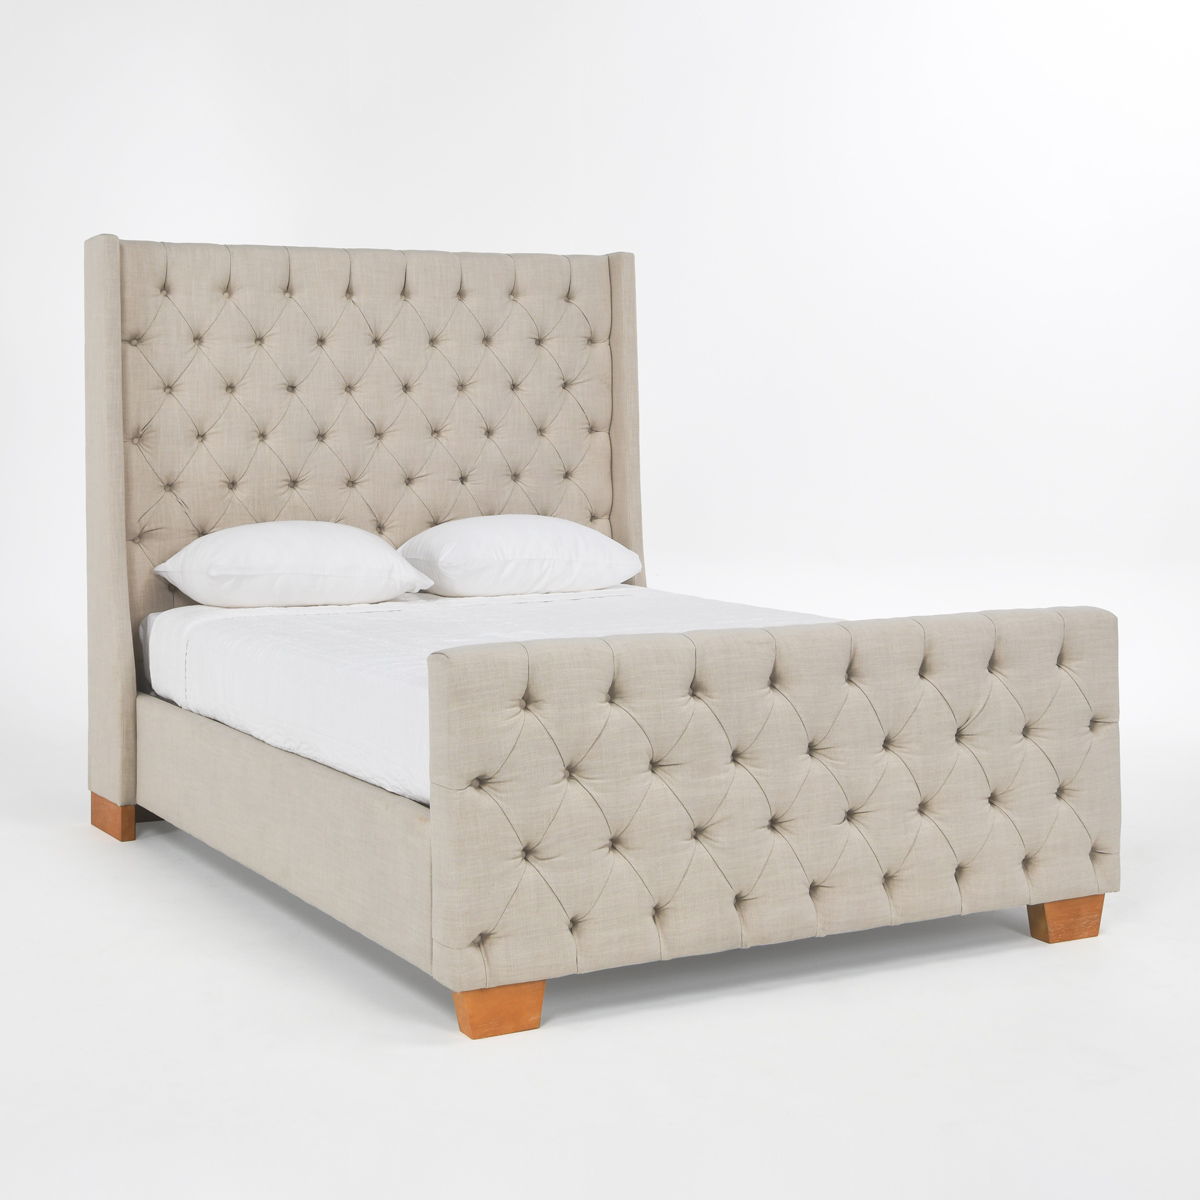 Laurent - Tufted Bed